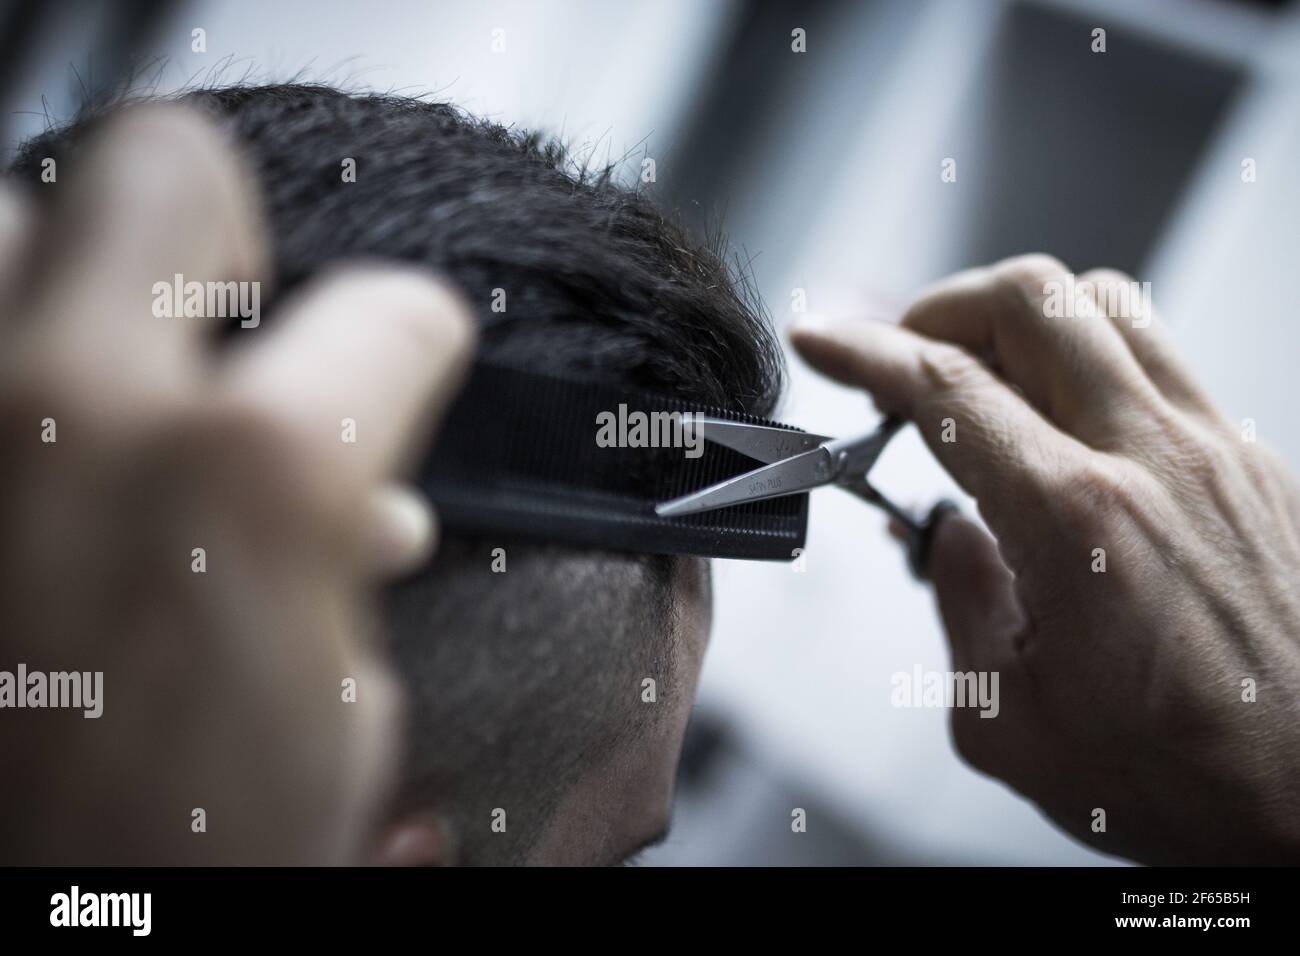 Barber Stock Photo